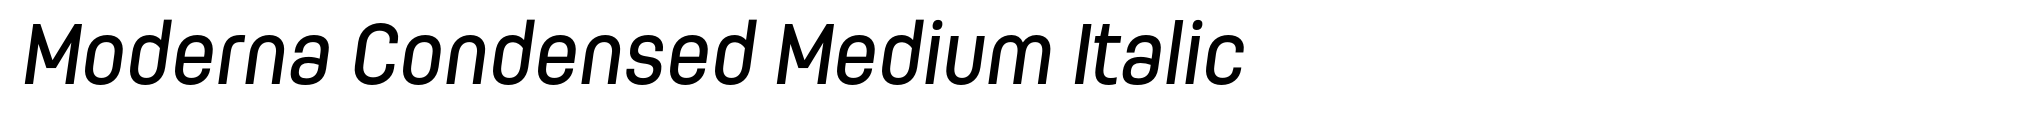 Moderna Condensed Medium Italic image